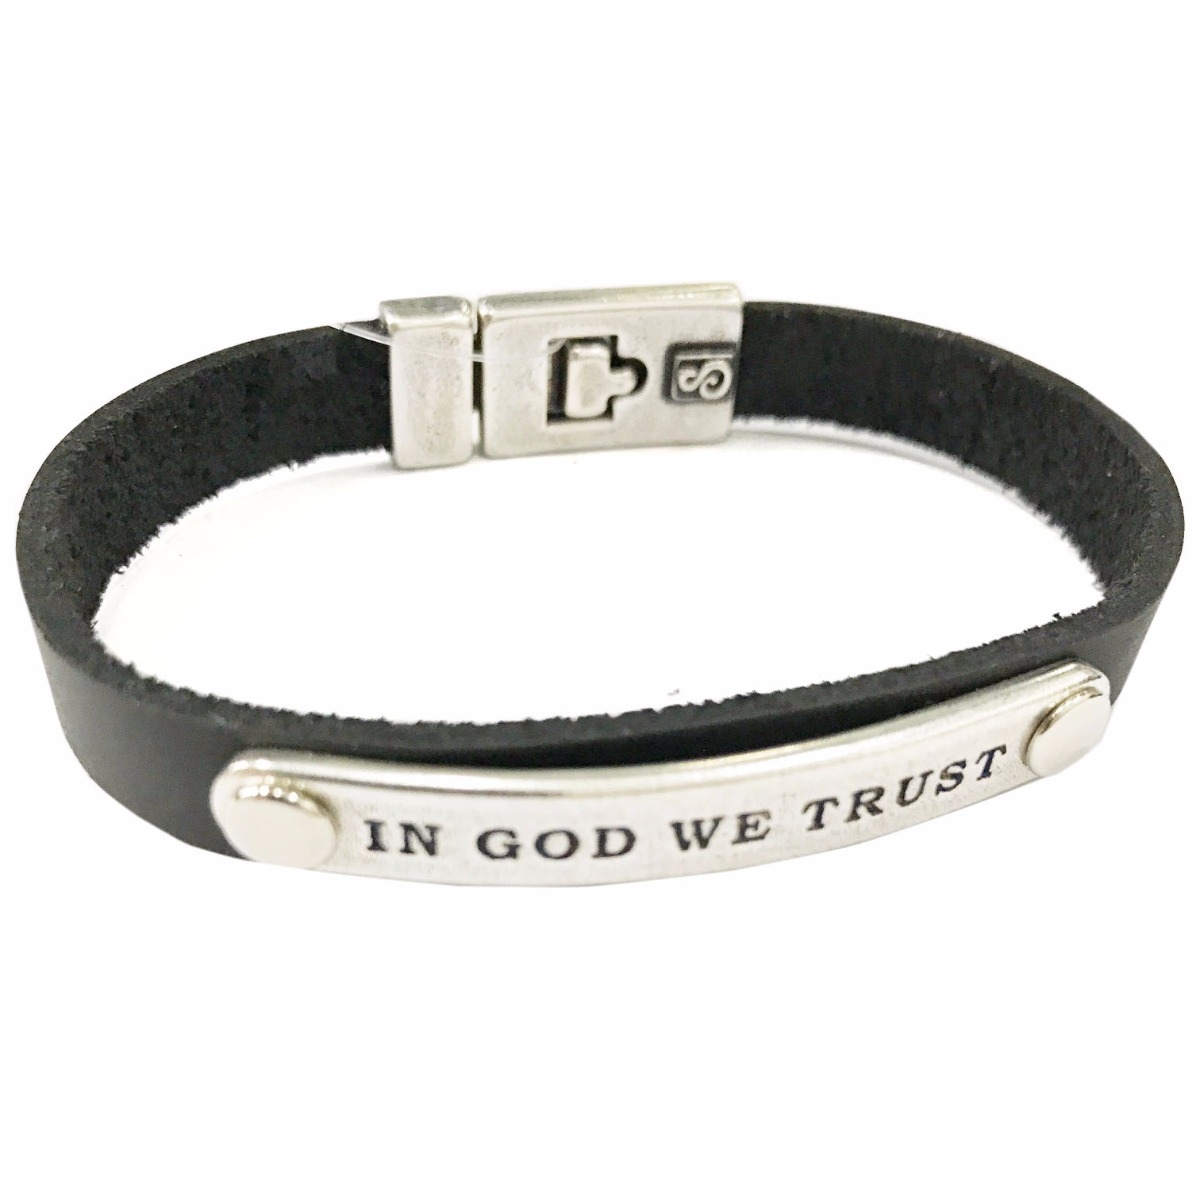 SEA Smadar Eliasaf In God We Trust Leather Bracelet - Black - 1